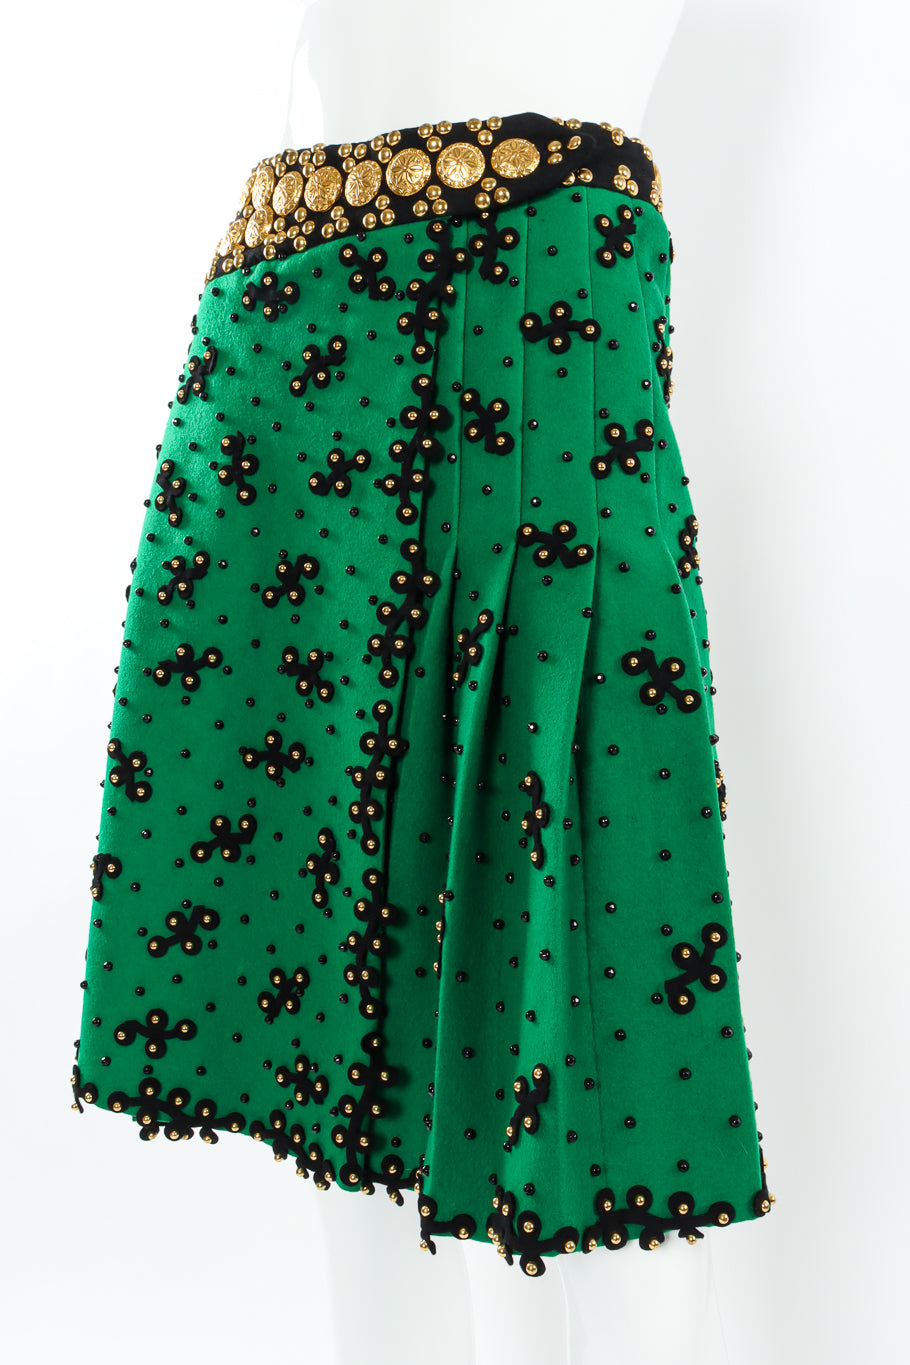 VIntage Adolfo Studded Embellished Wool Skirt front angle close @ Recess LA